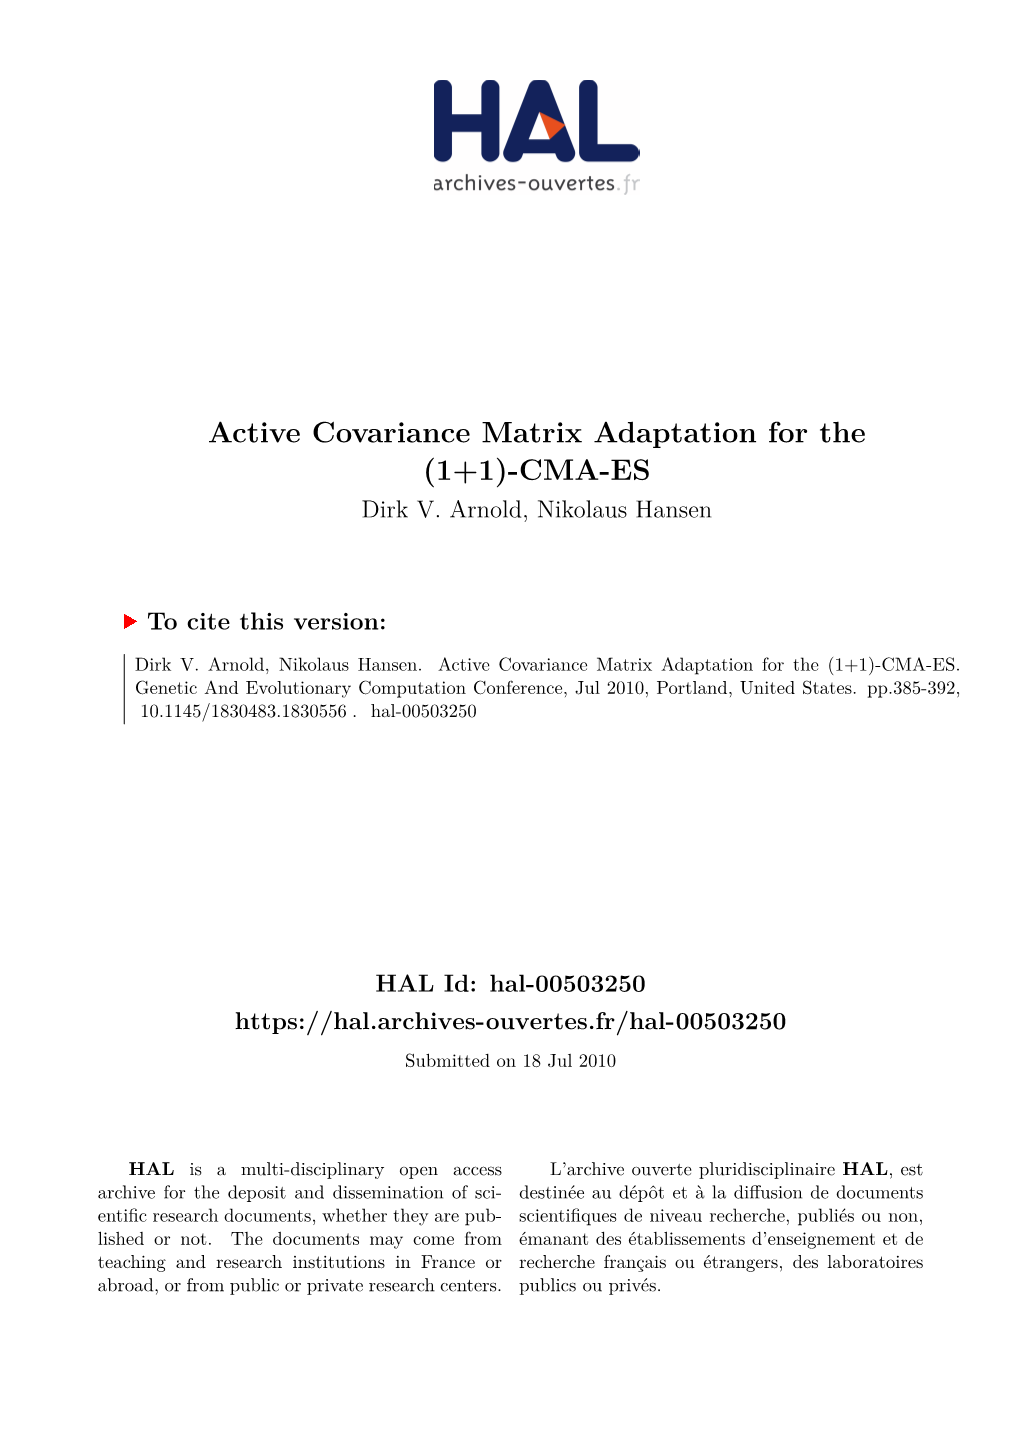 Active Covariance Matrix Adaptation for the (1+1)-CMA-ES Dirk V